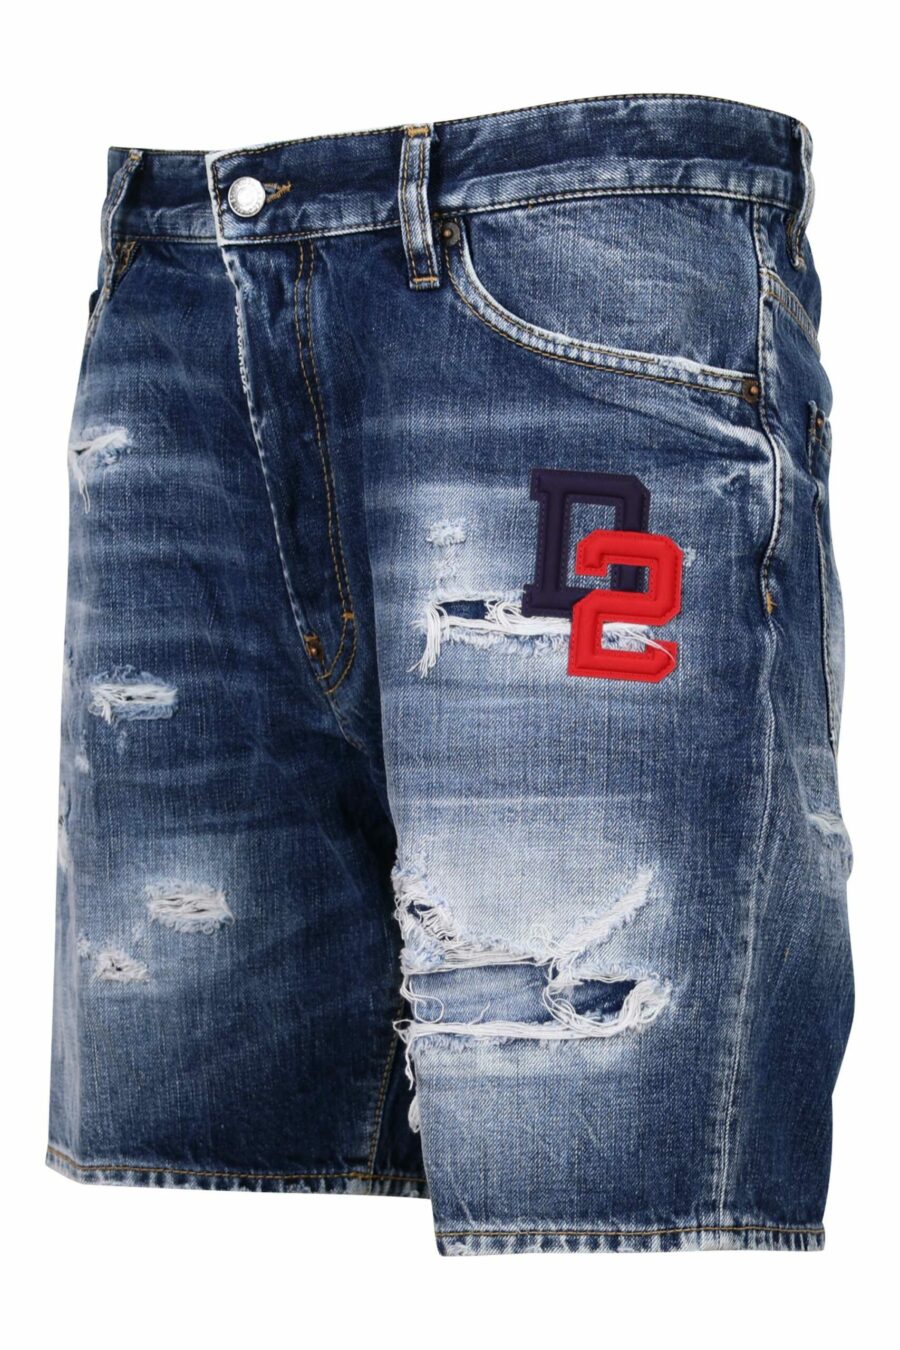 Blaue Denim-Shorts "marine short" mit rotem Logo - 8054148339920 1 skaliert